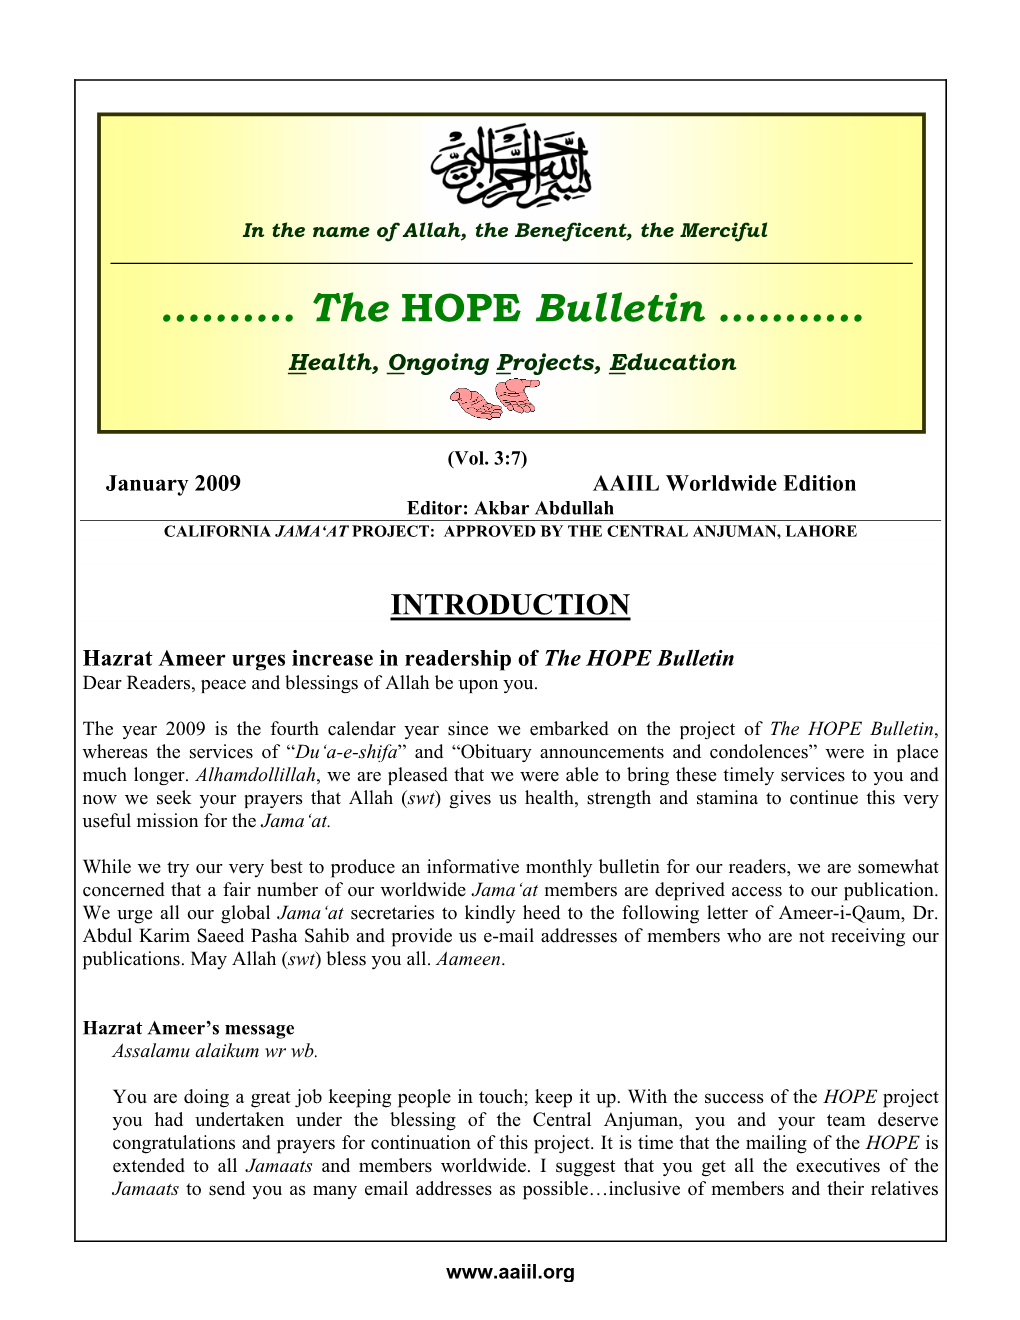 The HOPE Bulletin (January 2009) —